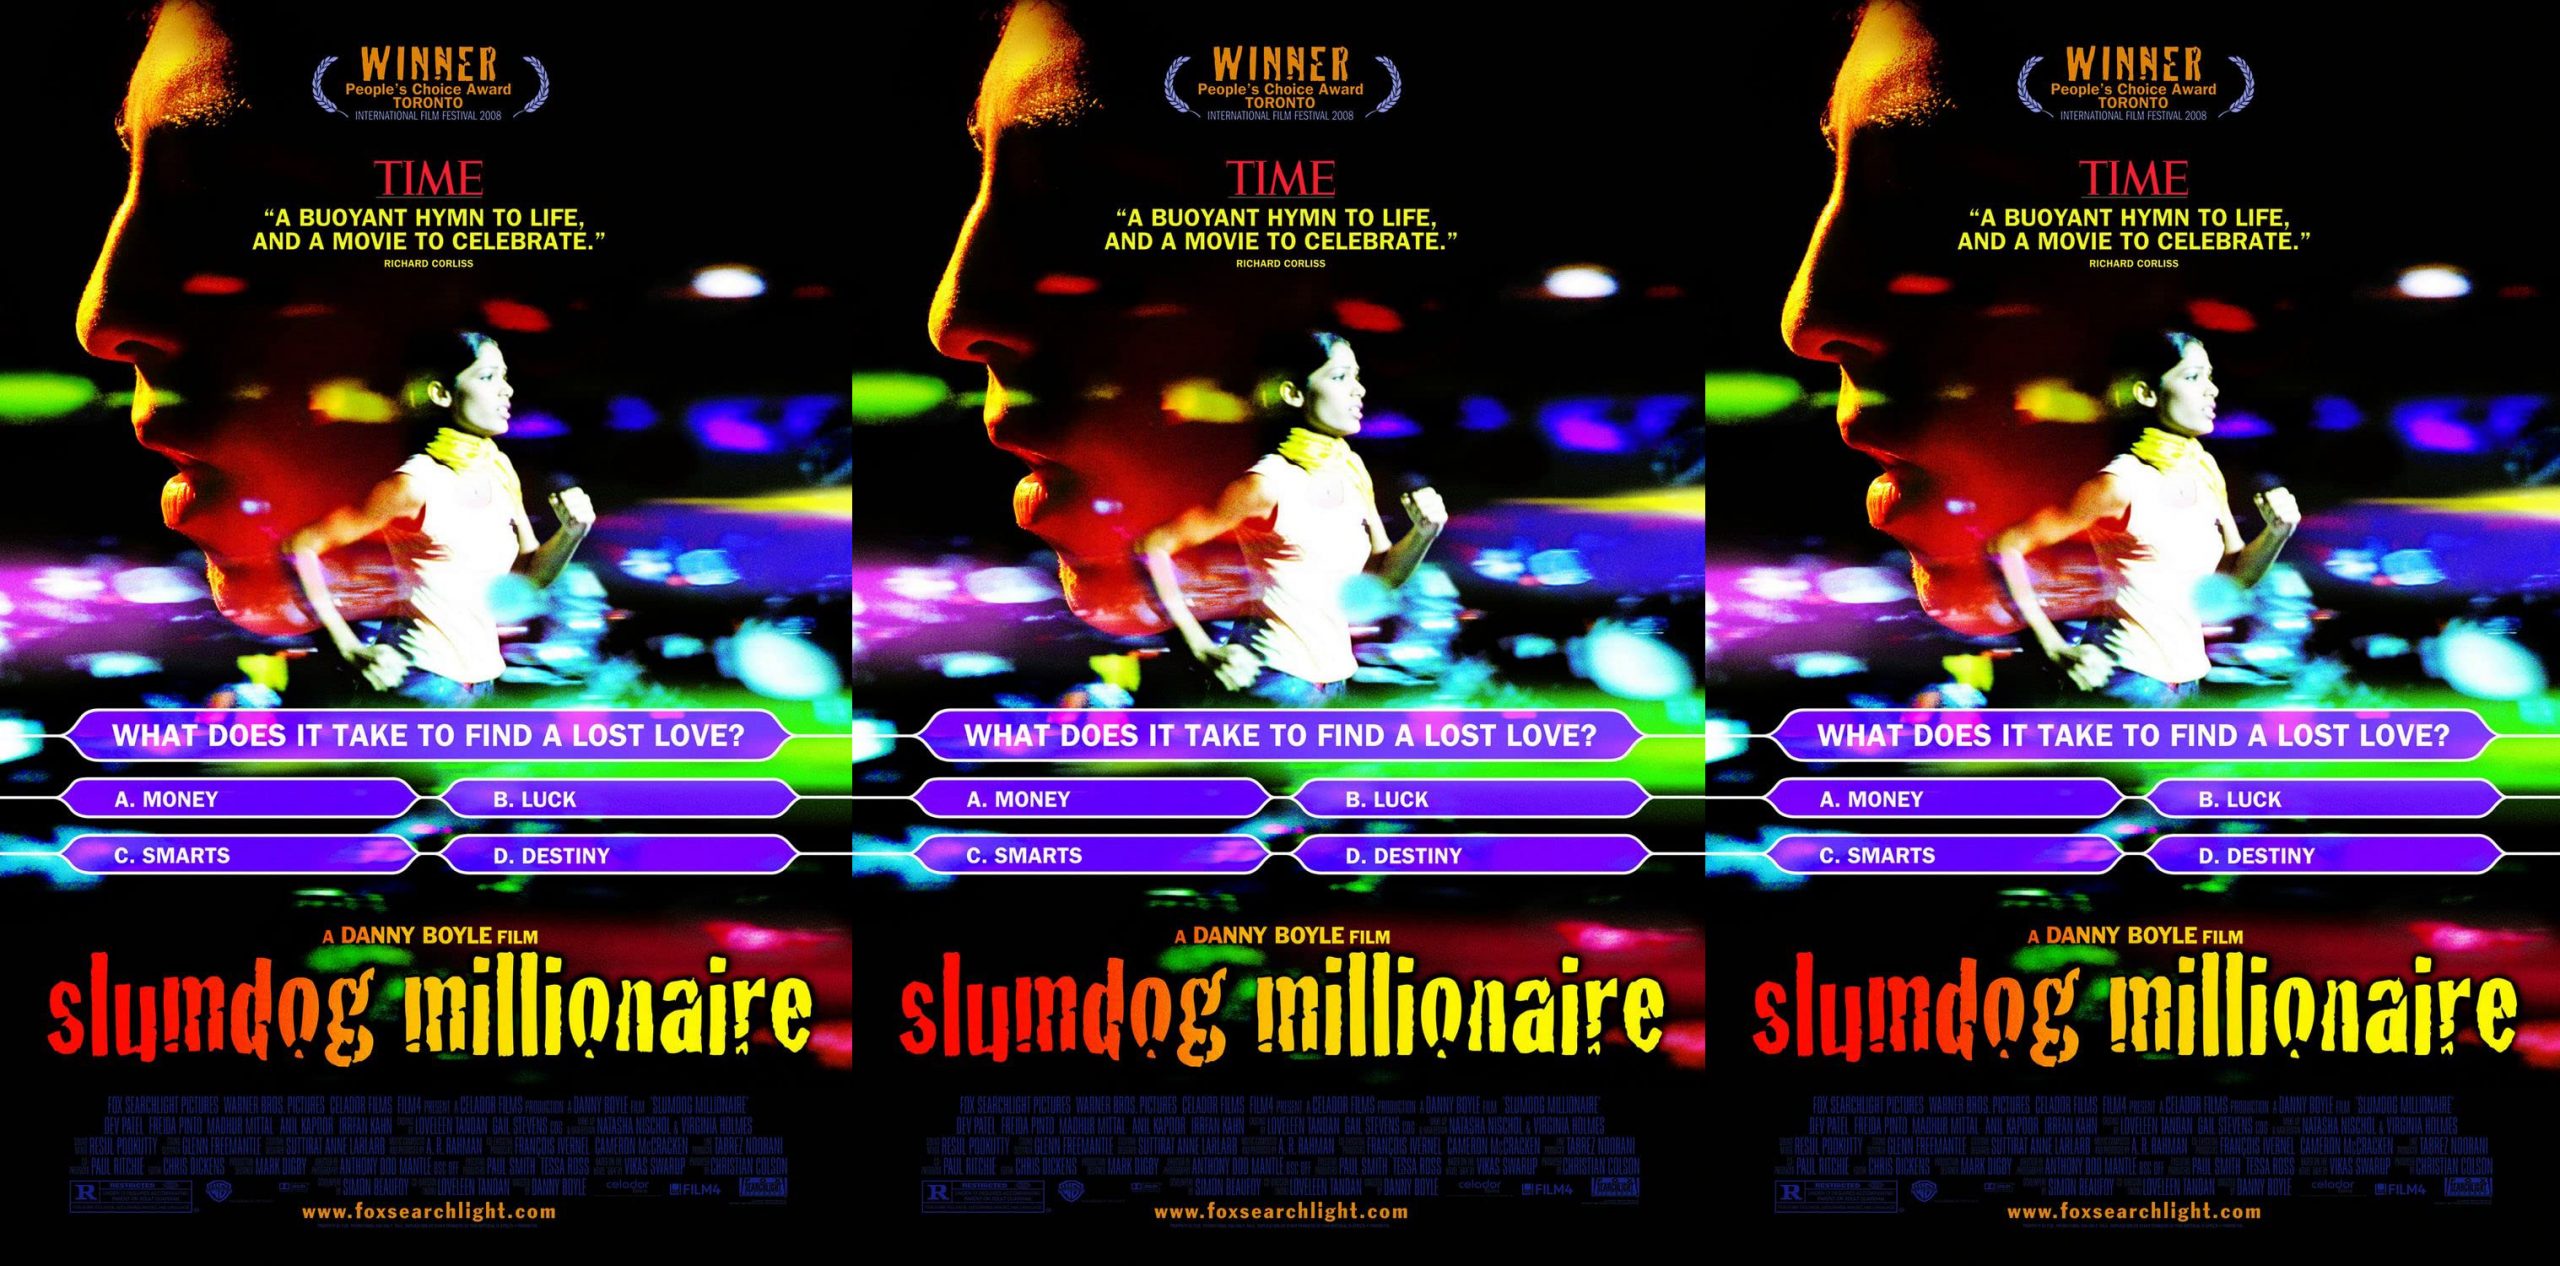 Slumdog Millionaire, HBO Max, Celador Films, Film4, Searchlight Pictures, Warner Bros., Pathé